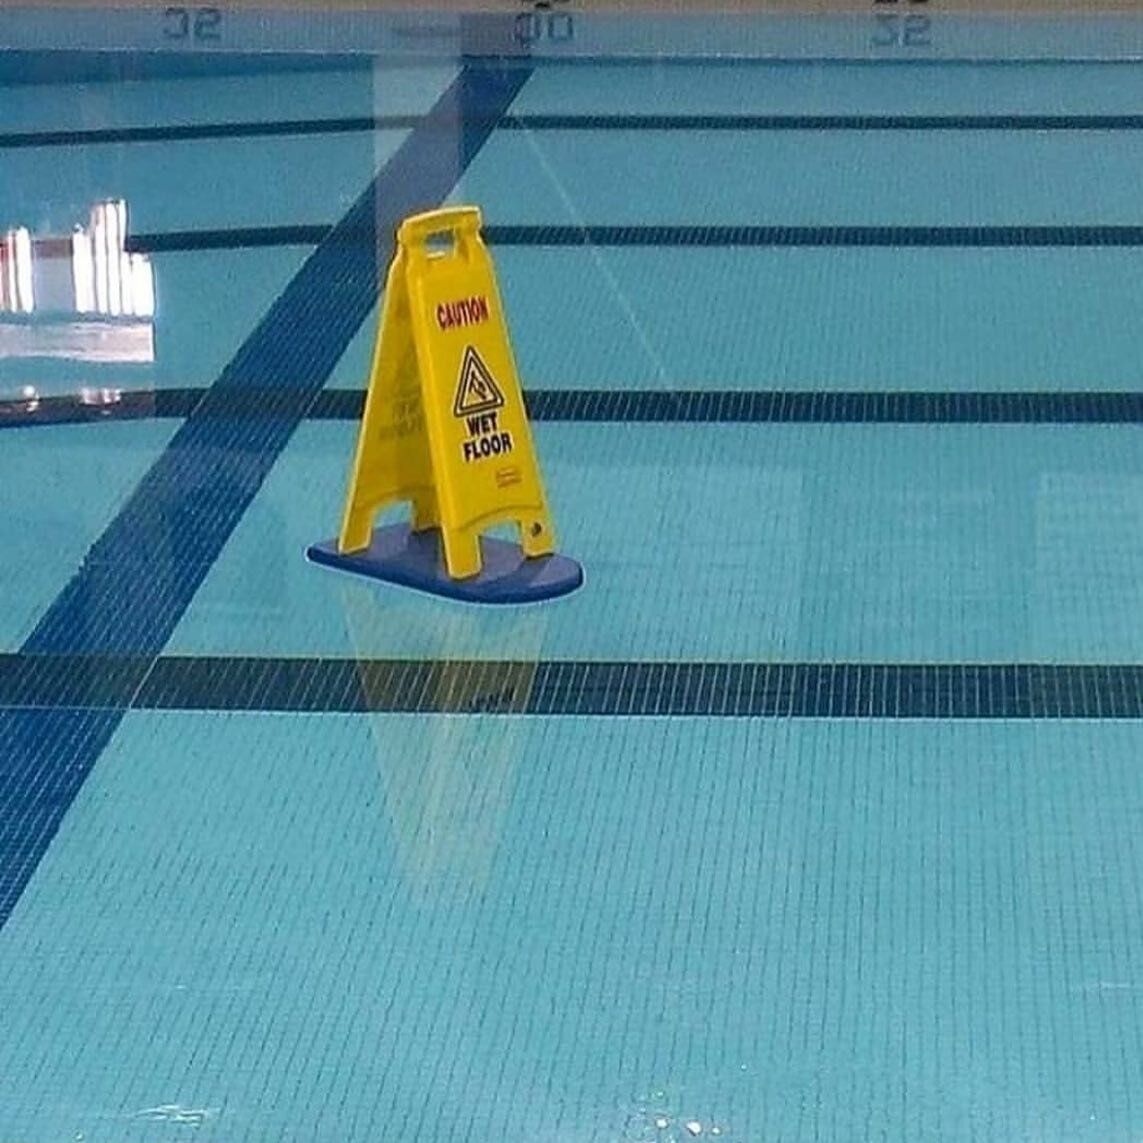 ⚠️ lifeguard humor

Via @artostomy 

_
#summer #summertime #pool #caution #slipperywhenwet #lifeguardproblems #poolhumor